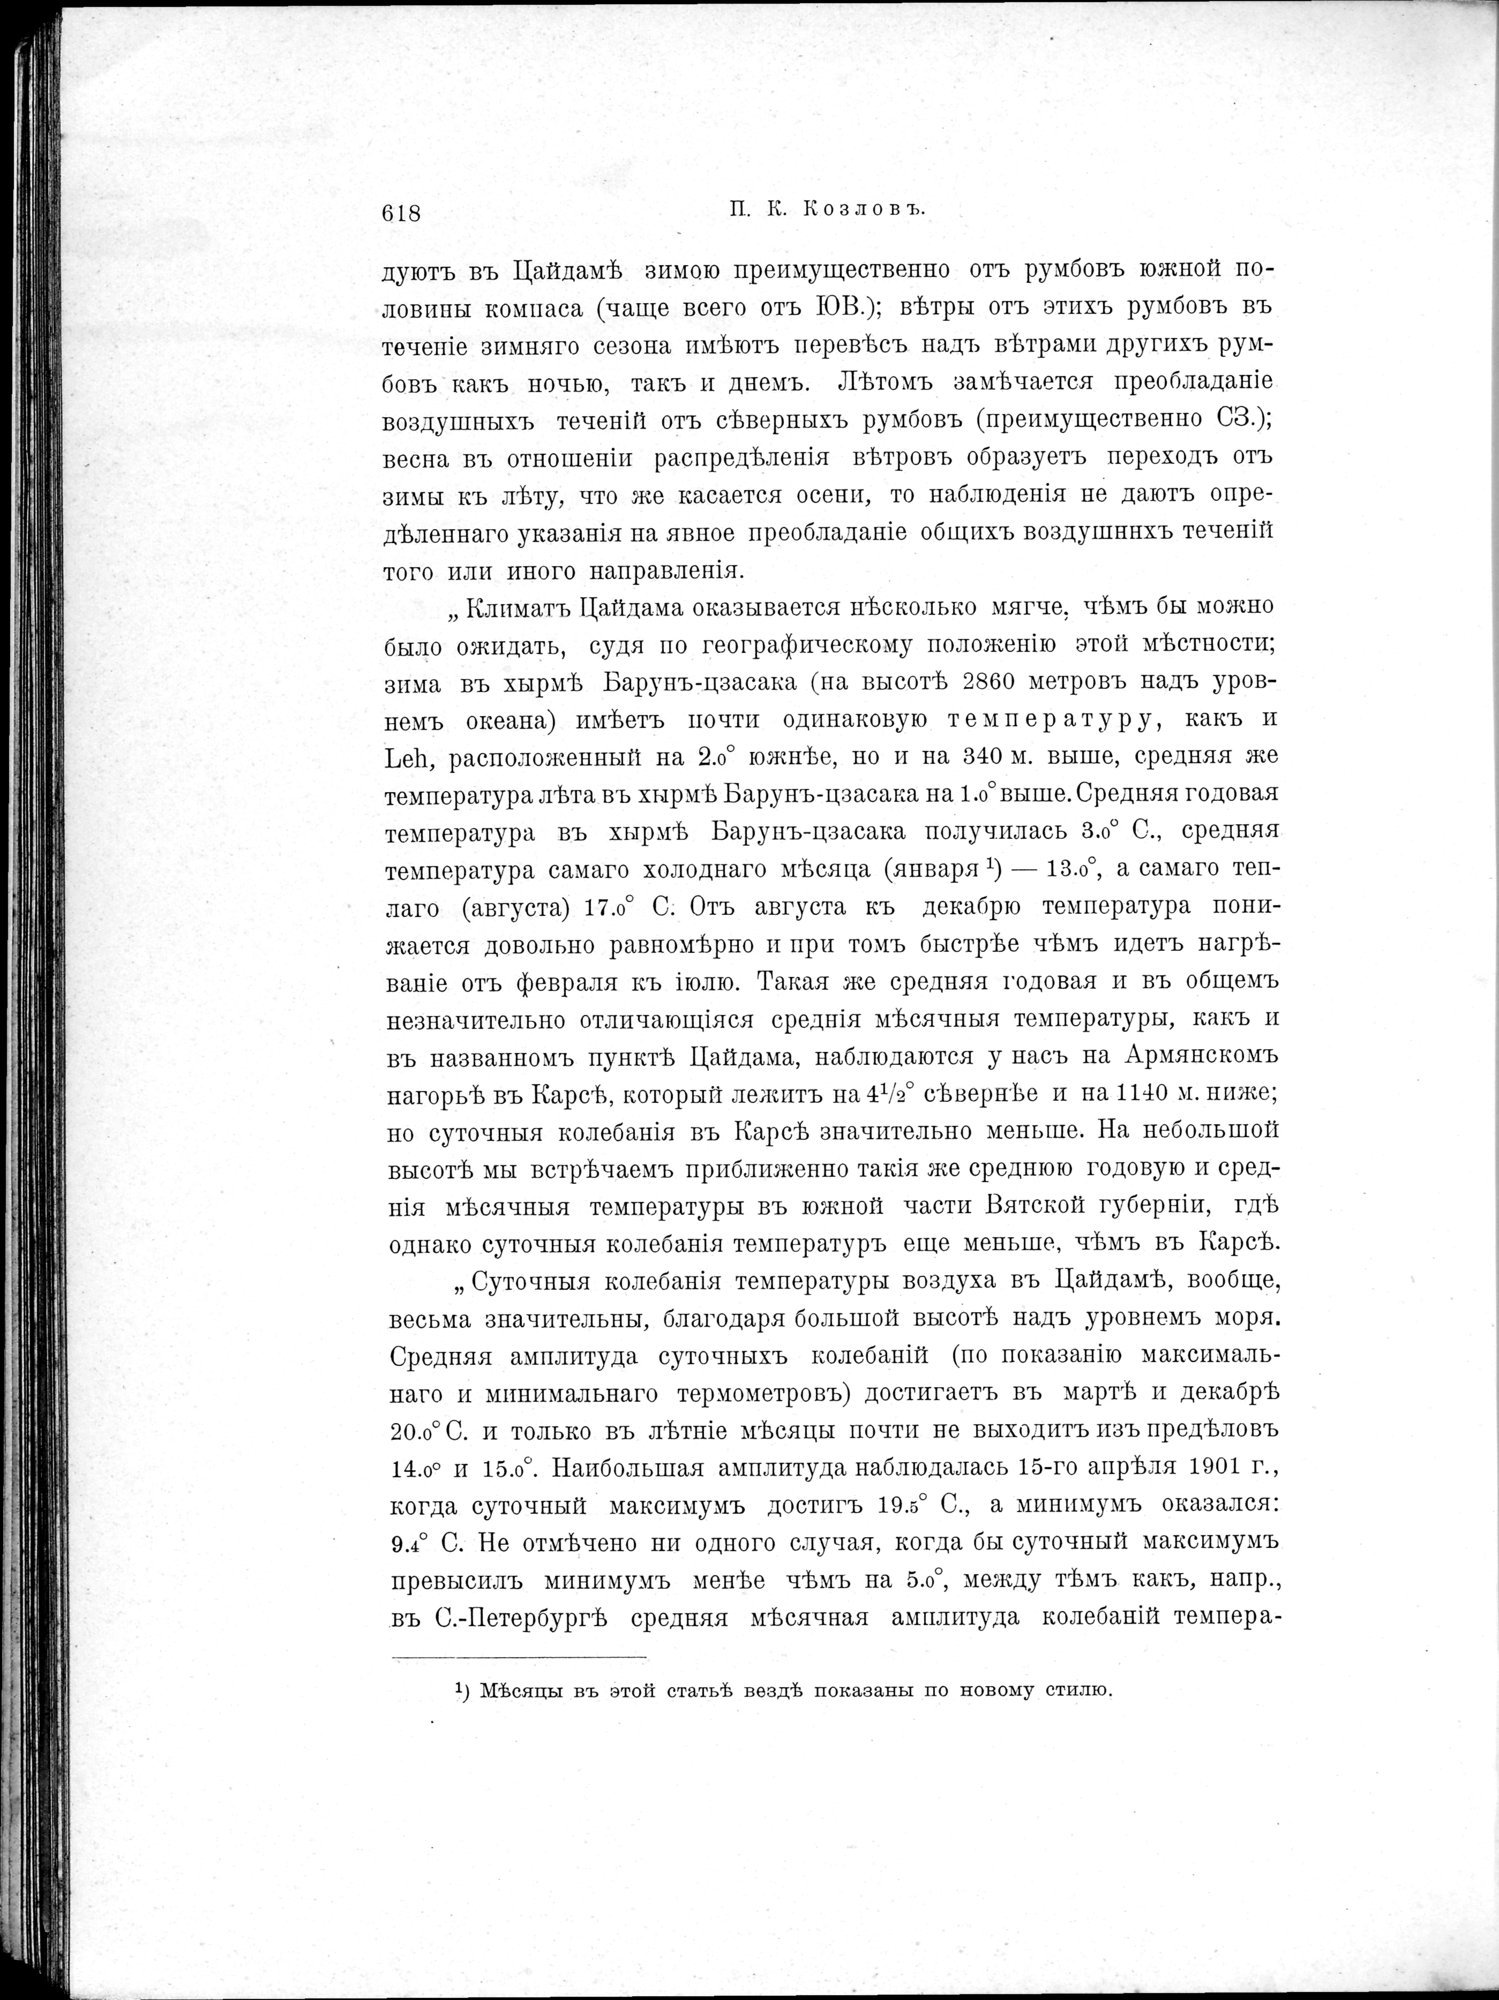 Mongoliia i Kam : vol.2 / Page 446 (Grayscale High Resolution Image)